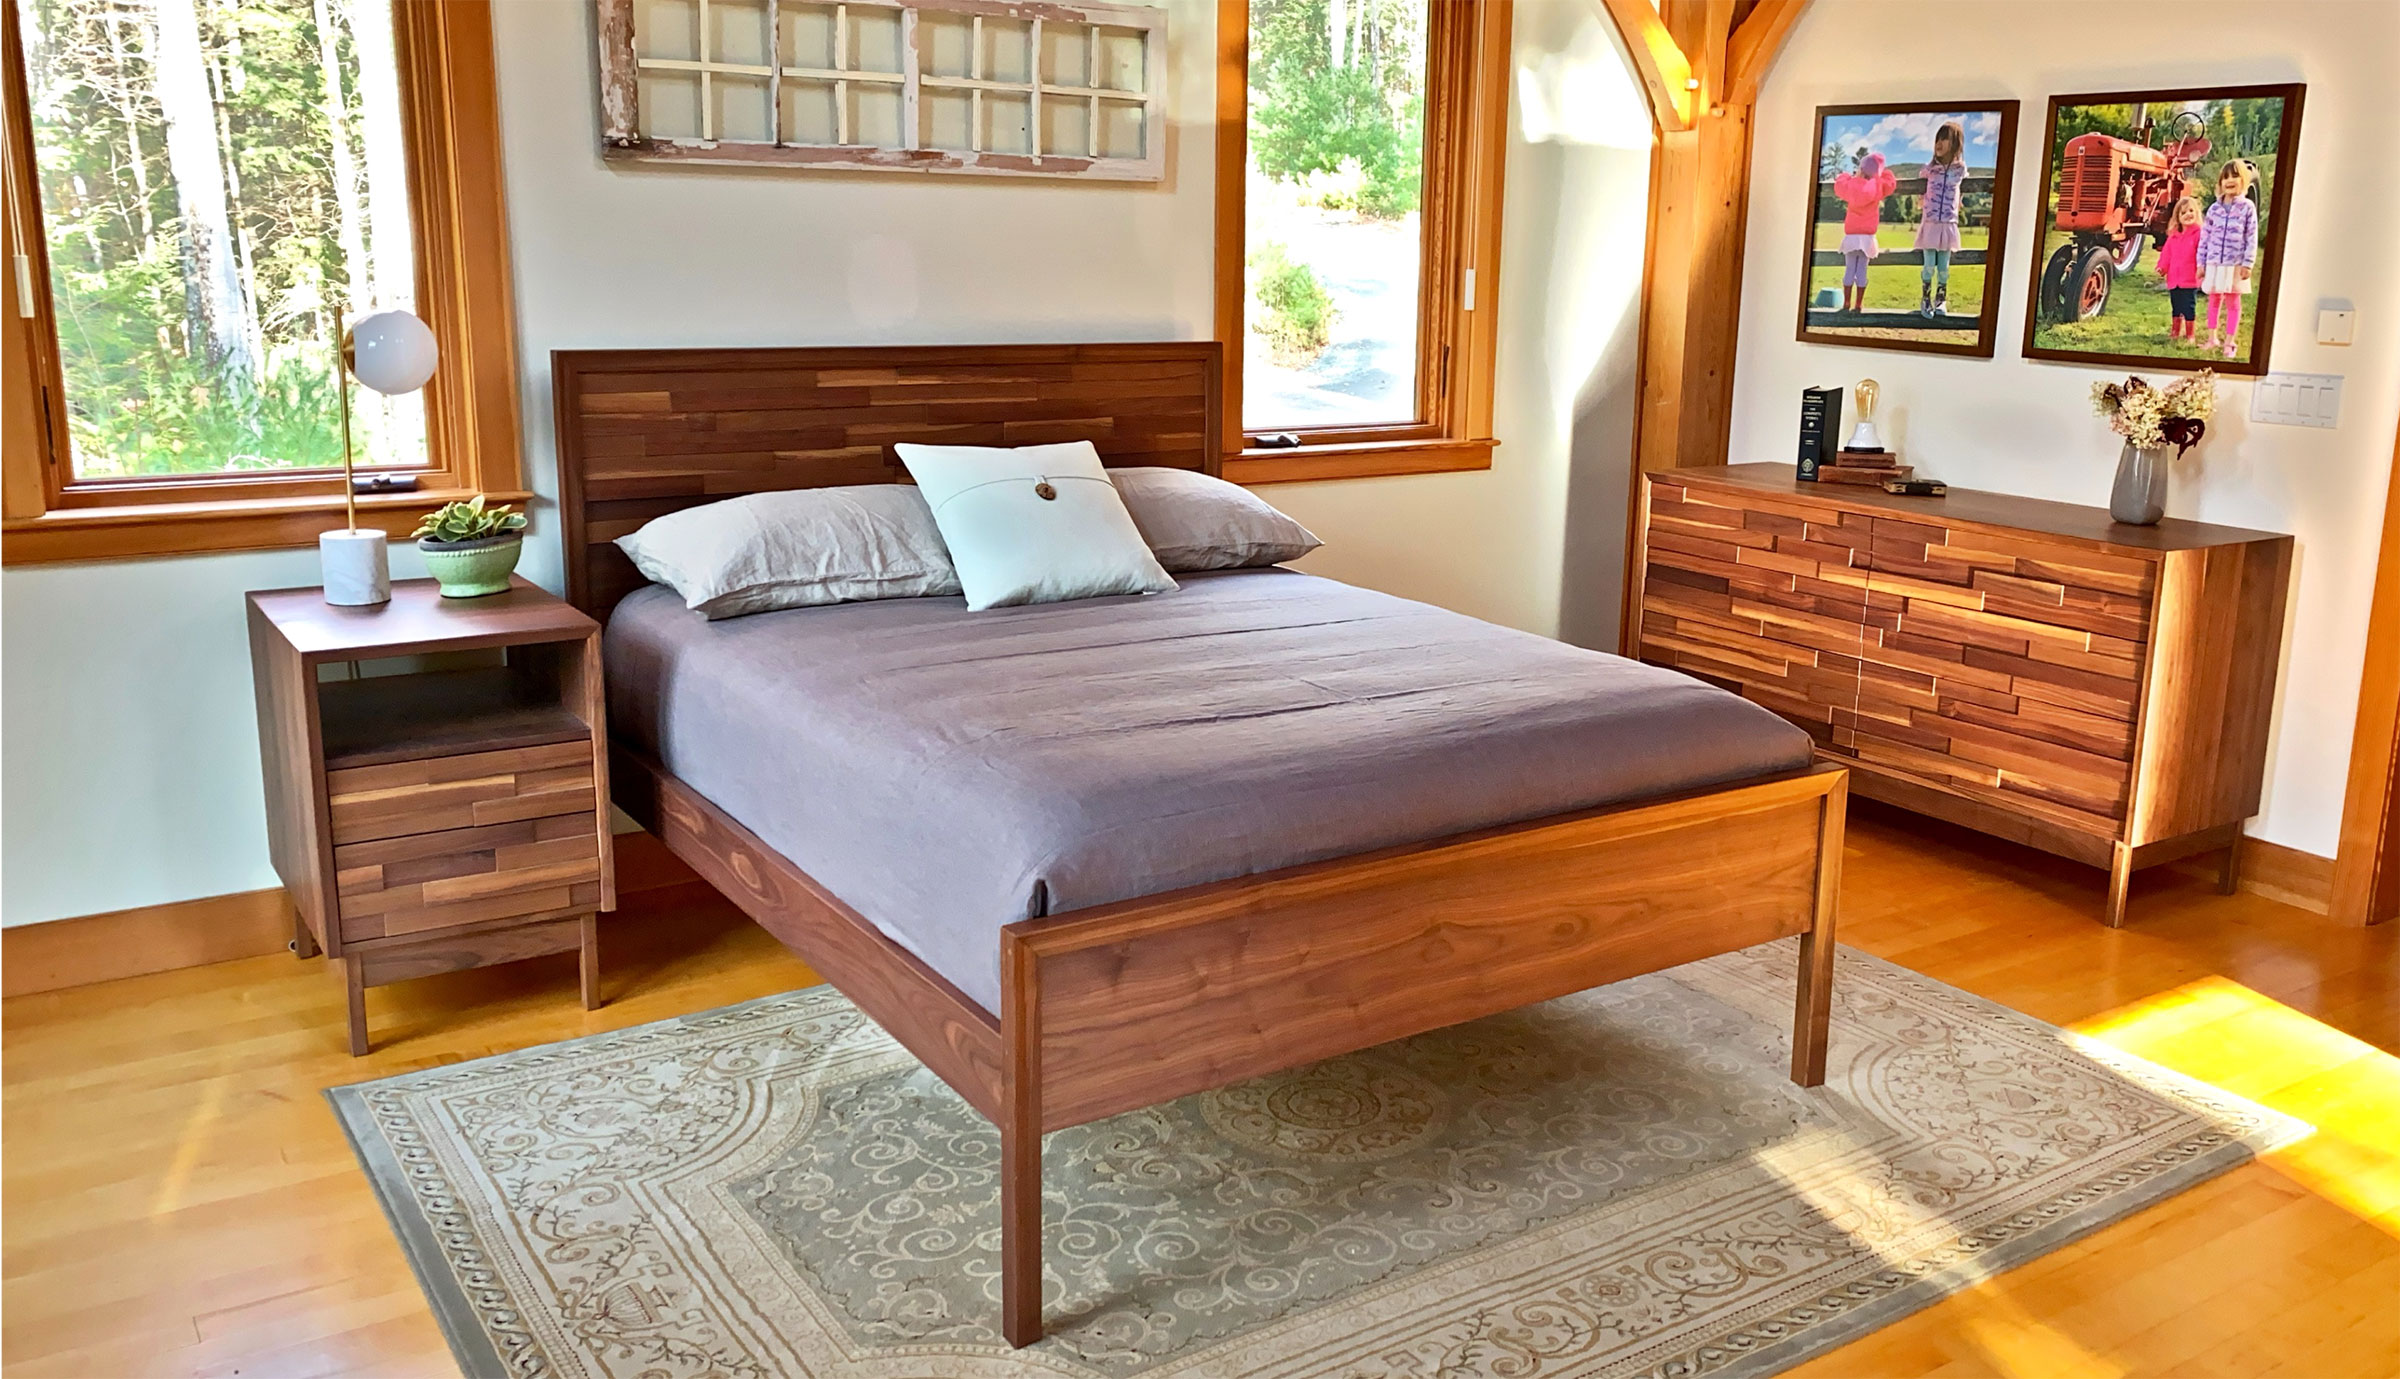 walnut bed, dresser and nightstand